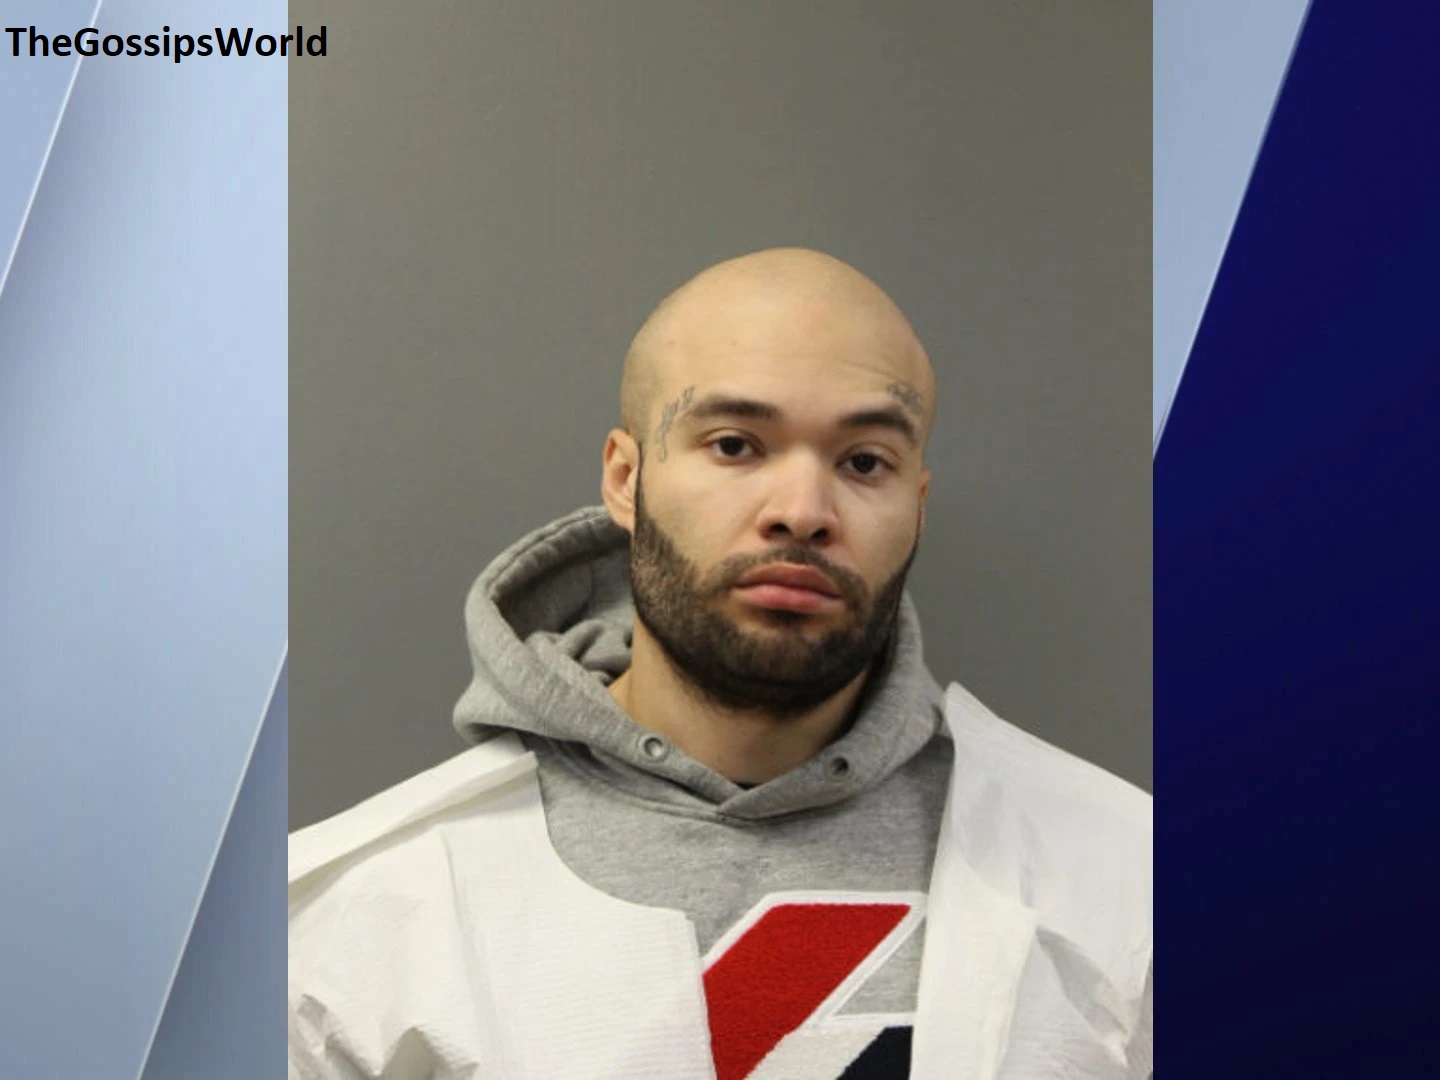 Chicago Portage Park Shooting's Suspect Samuel Persons Arrested